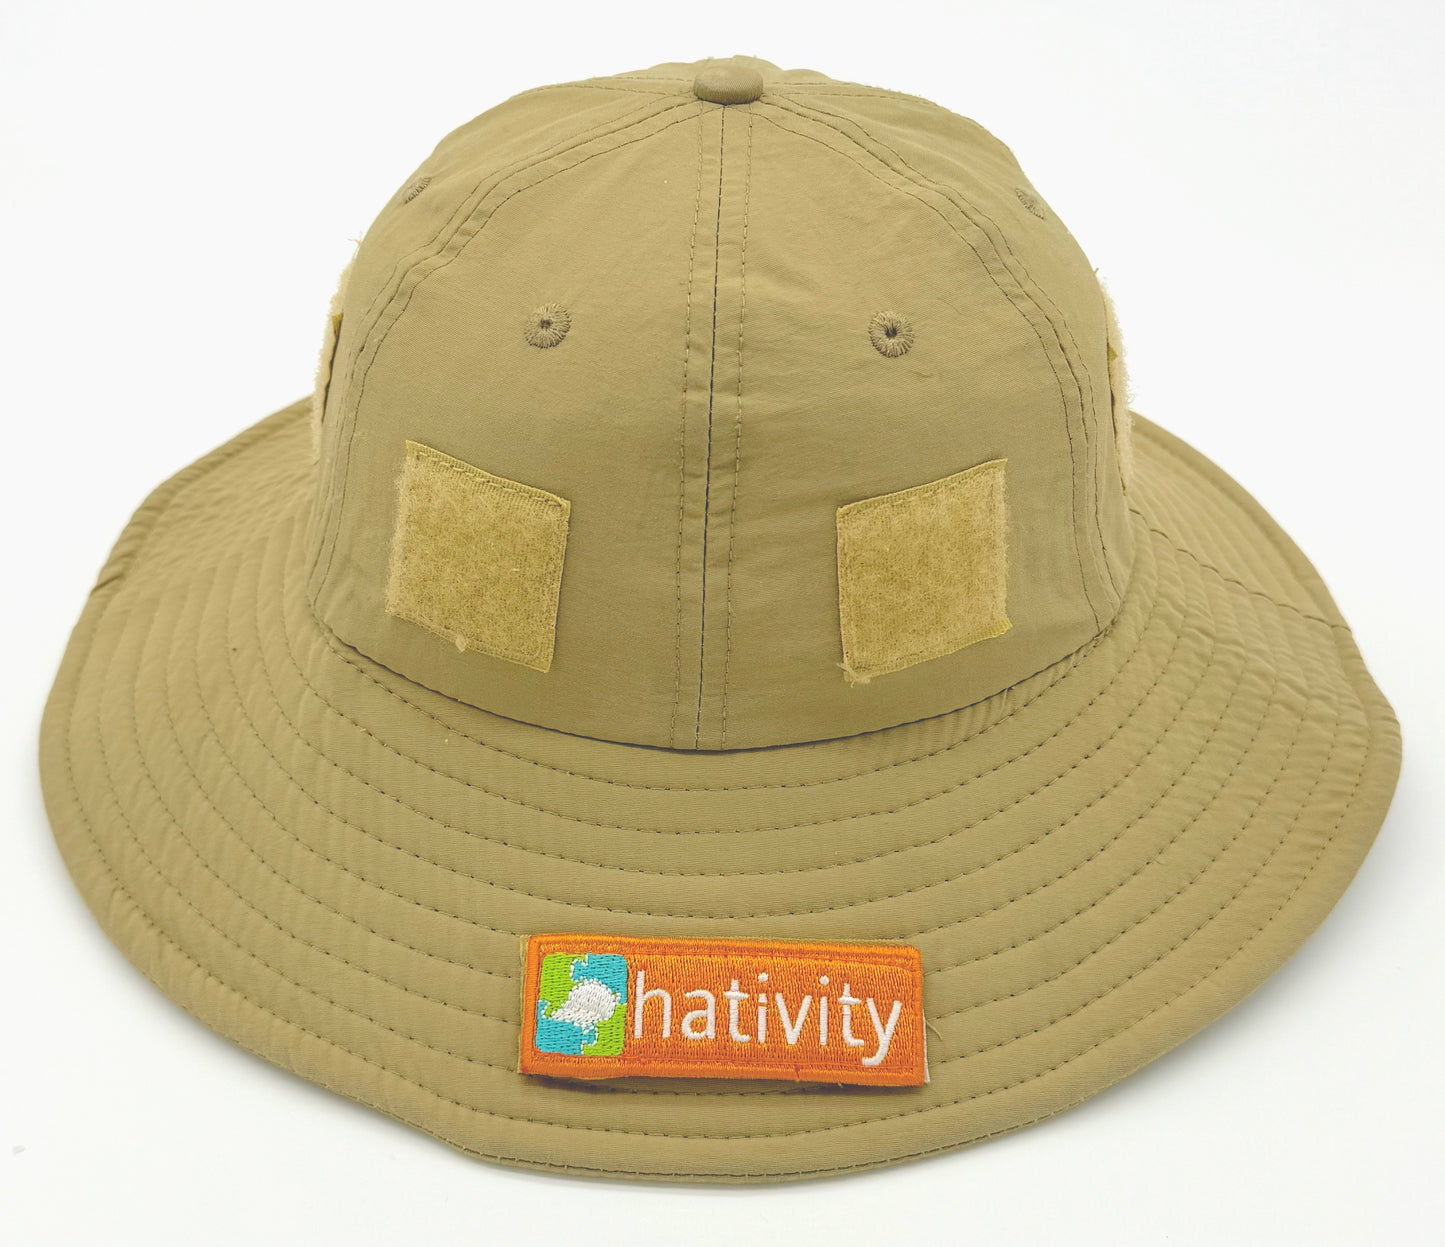 Hativity® Nylon Sun Cap with UPF 50+ - Hat Only